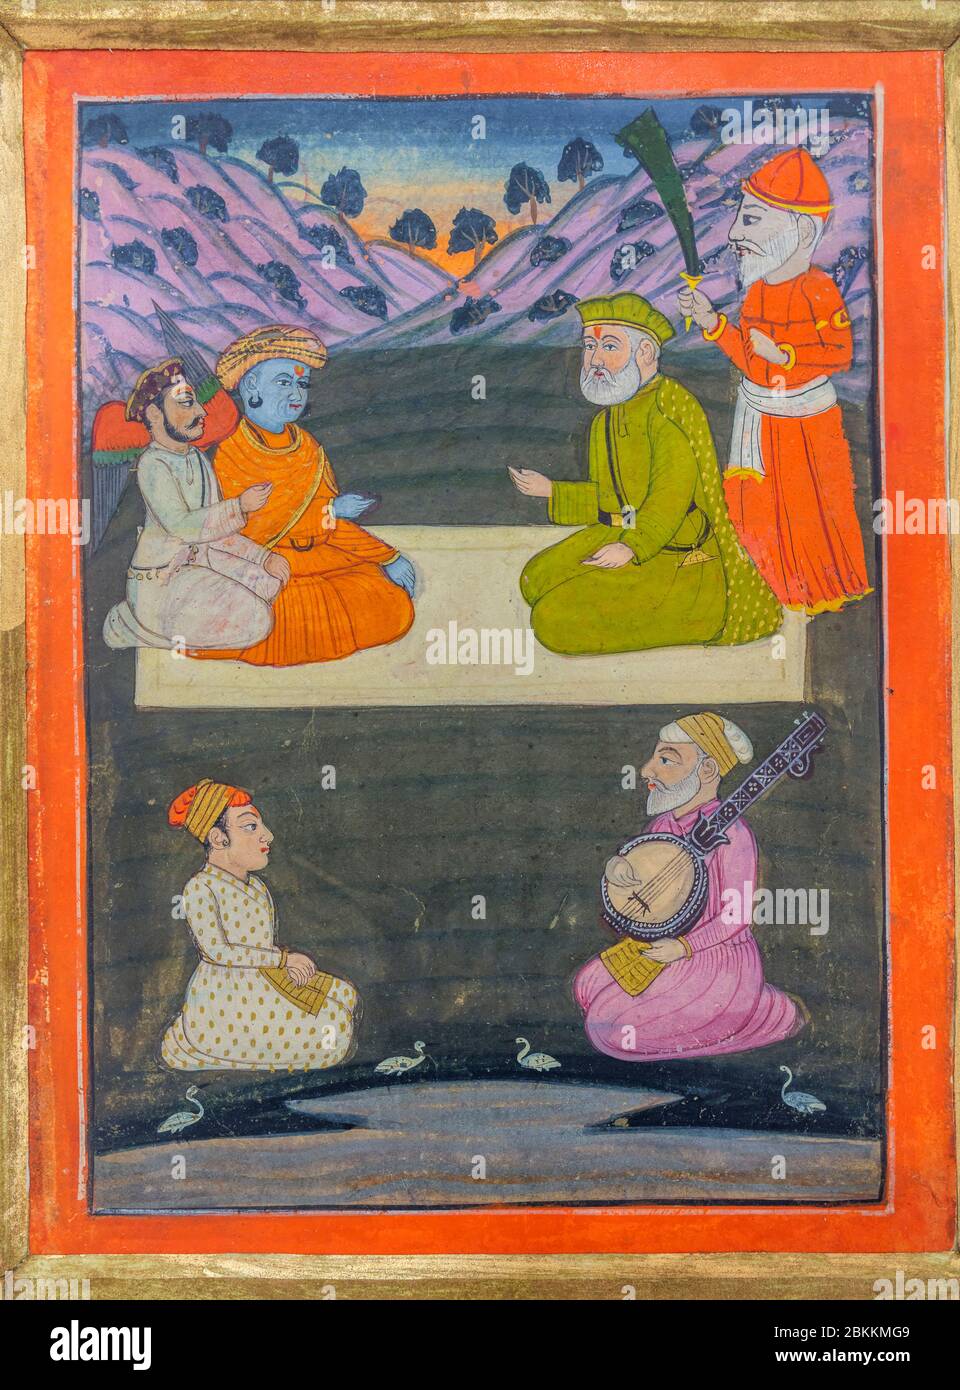 Guru Nanak in discussion with Guru Gorakh Nath, 1830s painting, Museum, Delhi, India Stock Photo